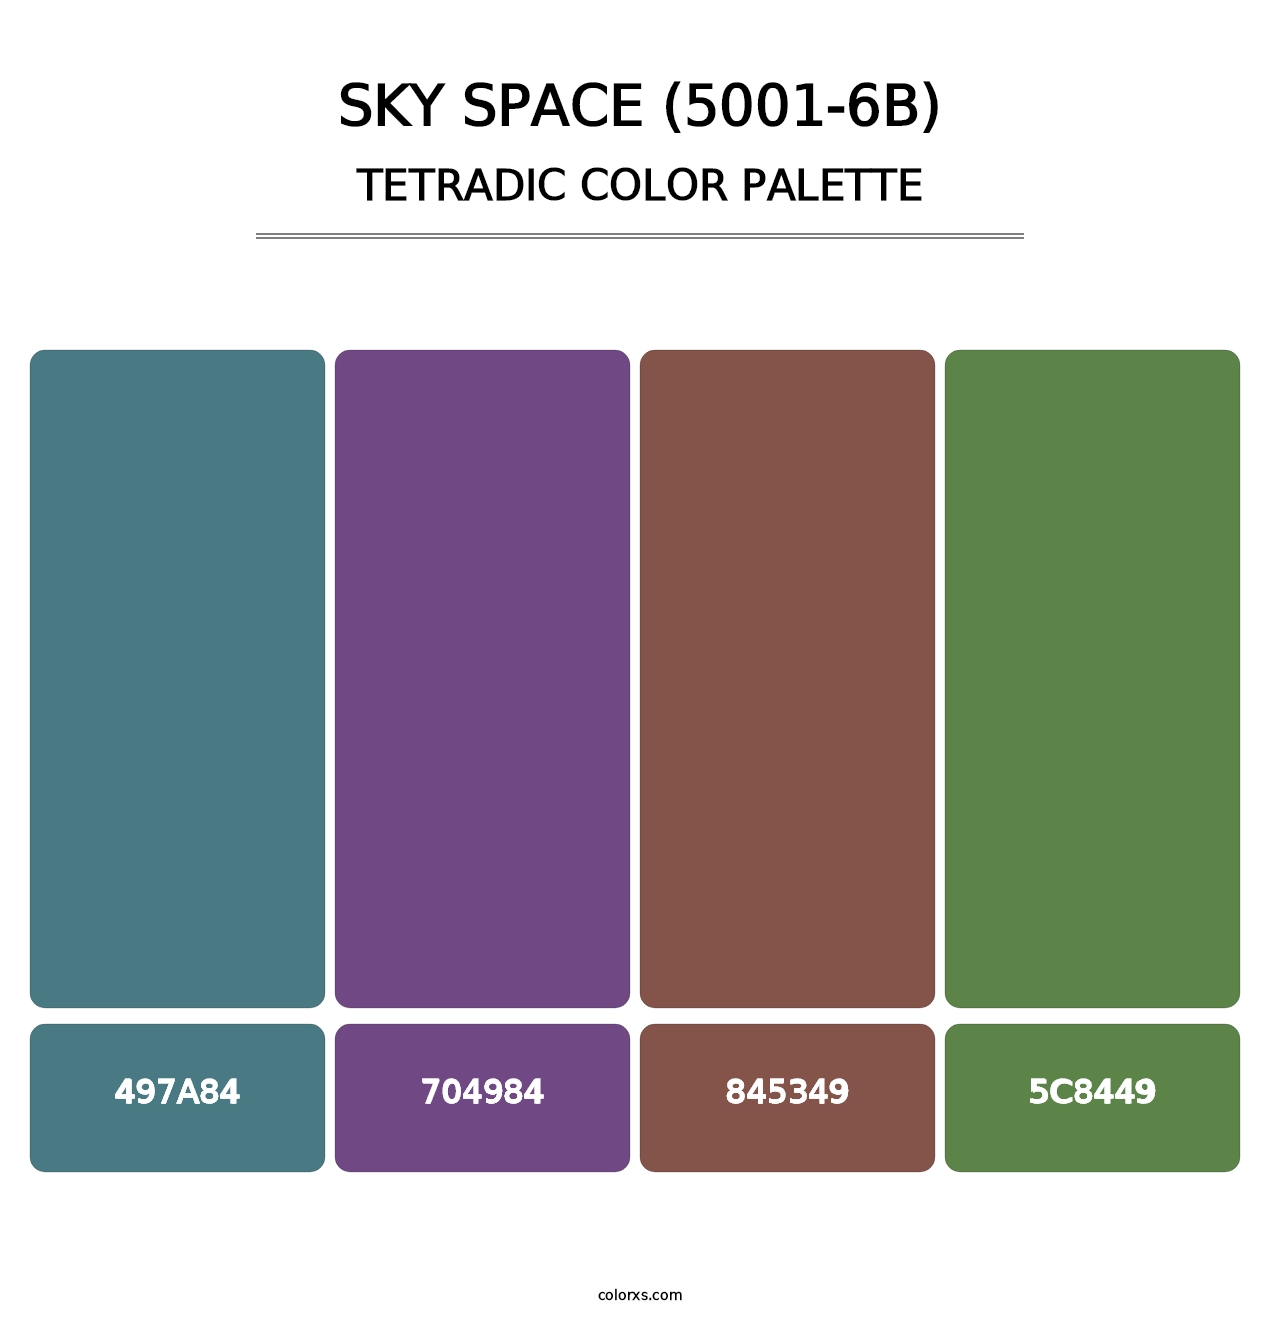 Sky Space (5001-6B) - Tetradic Color Palette